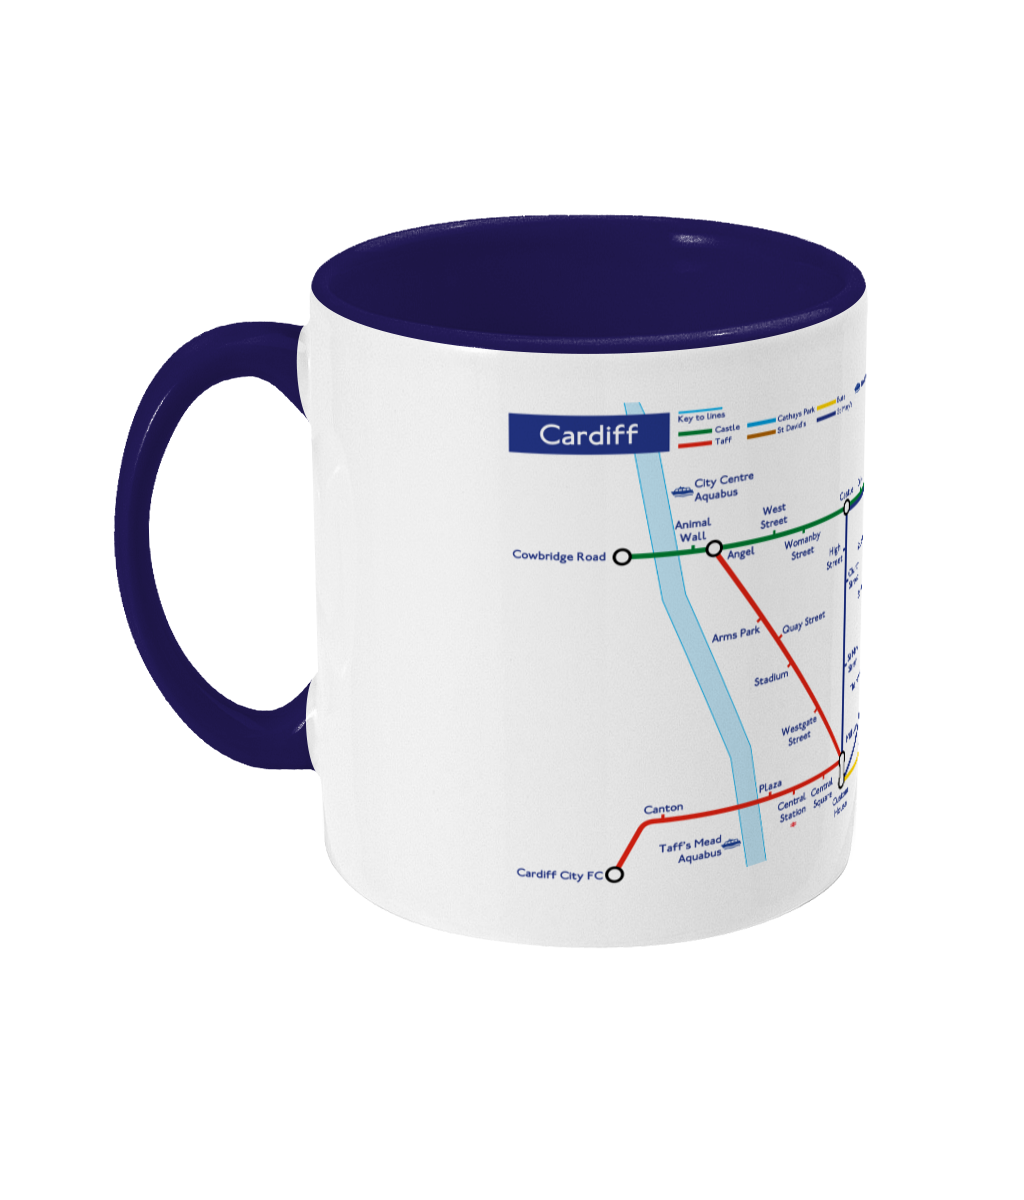 Maps and Signs Tube Map 'Cardiff' Mug